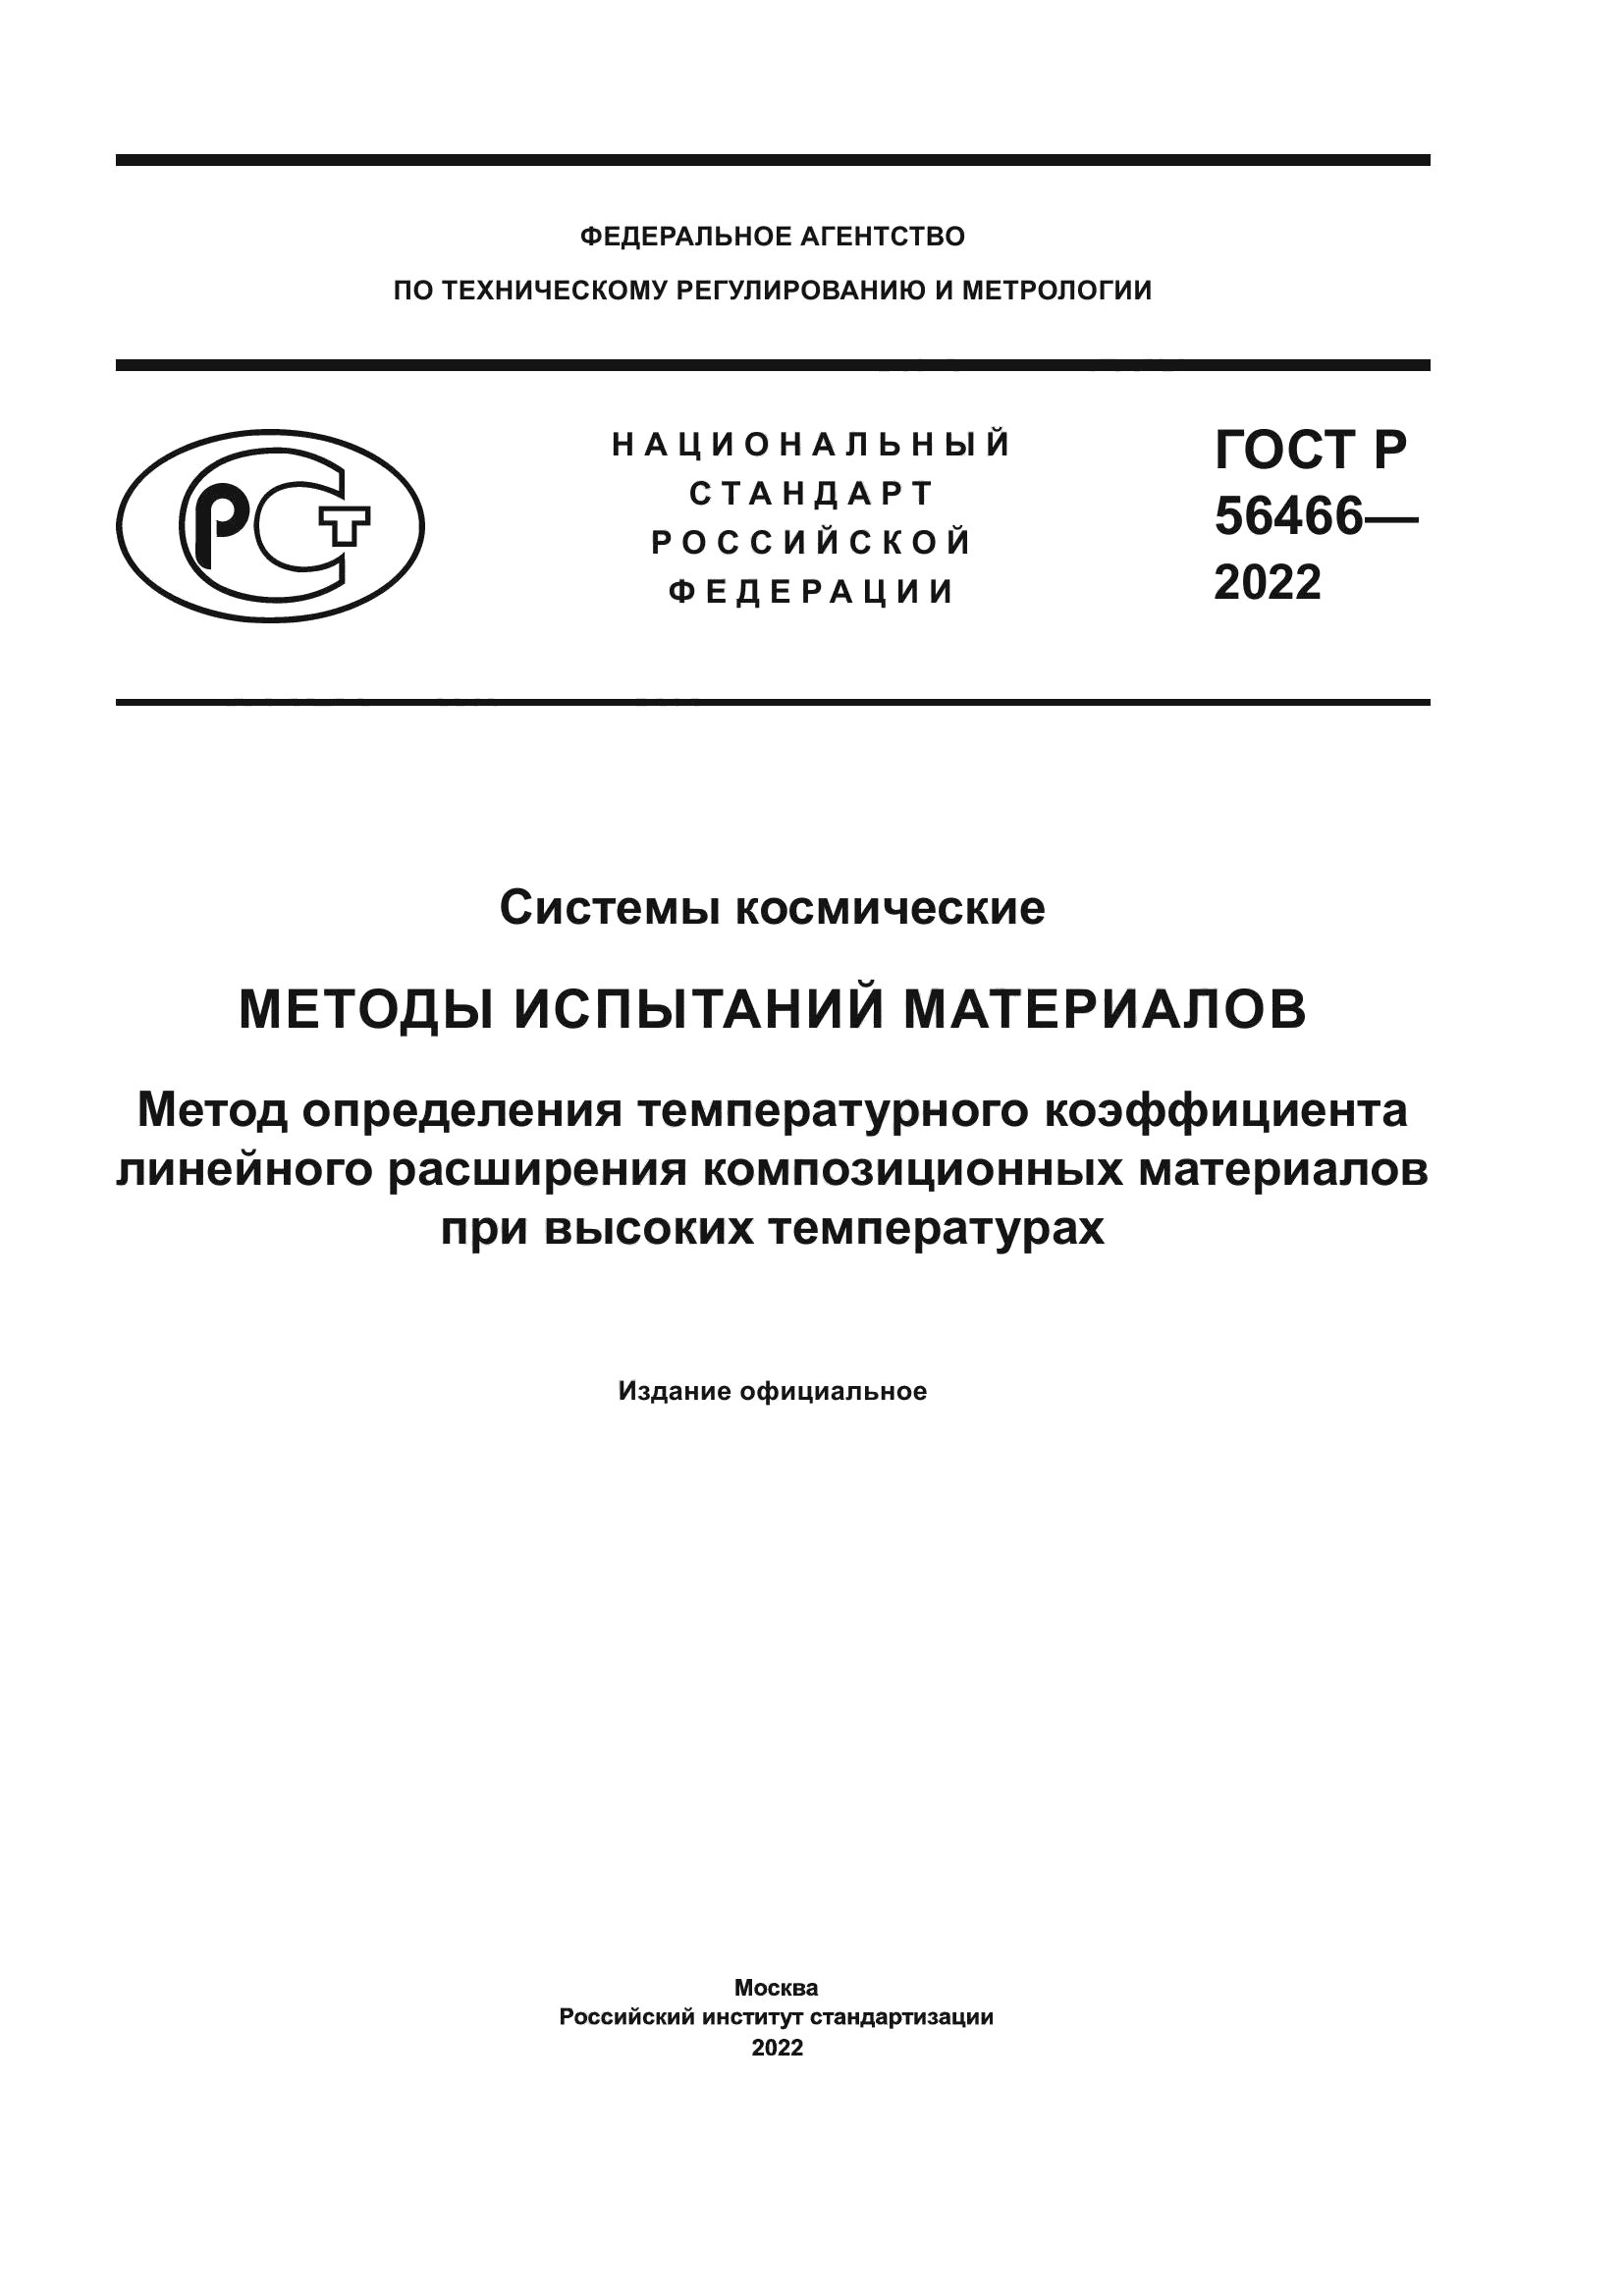 ГОСТ Р 56466-2022